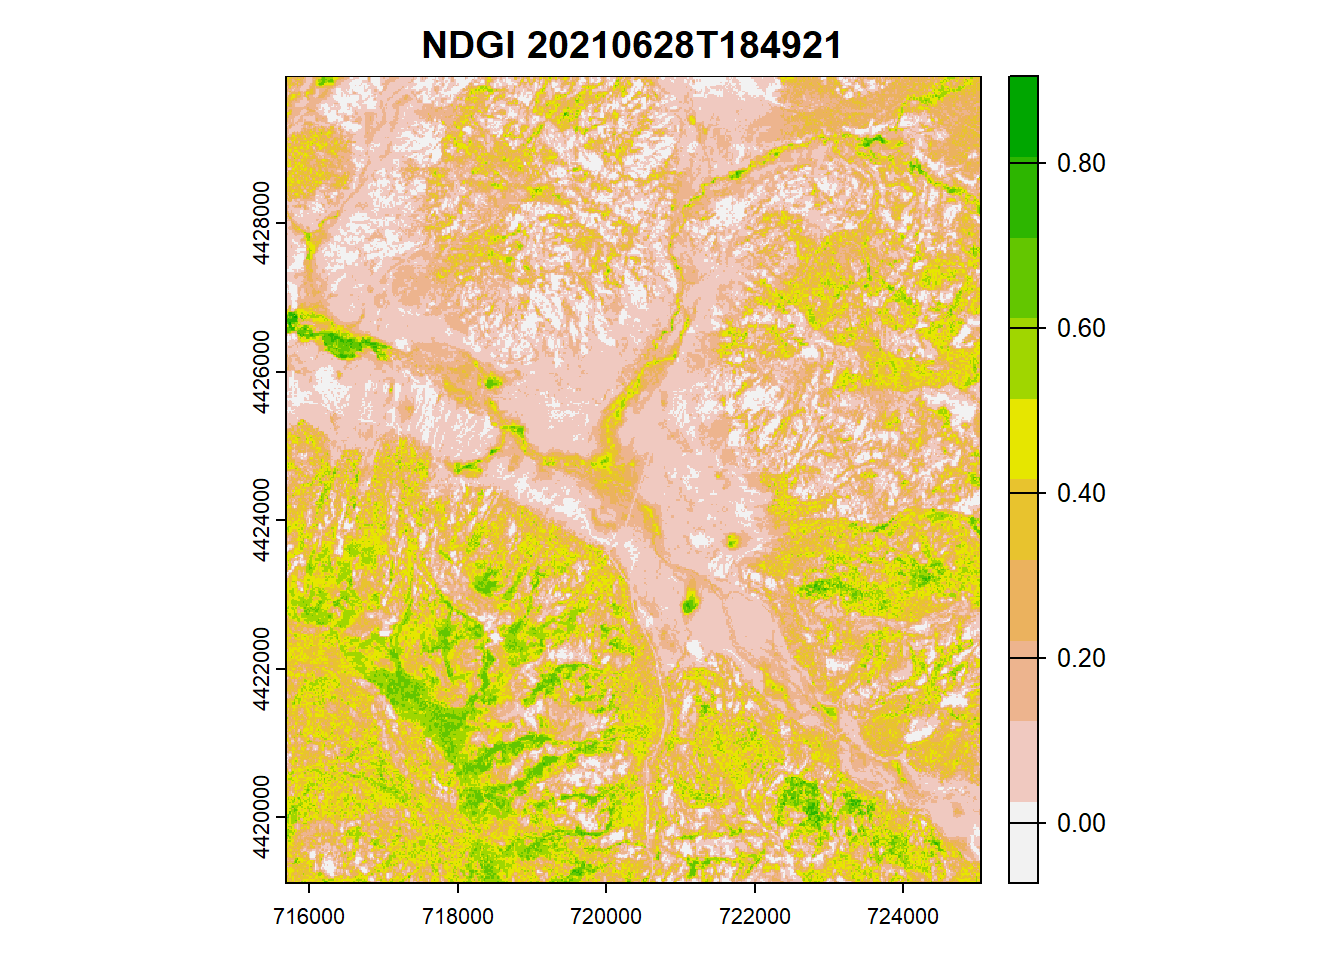 NDGI from Sentinel-2 image, 20210628.